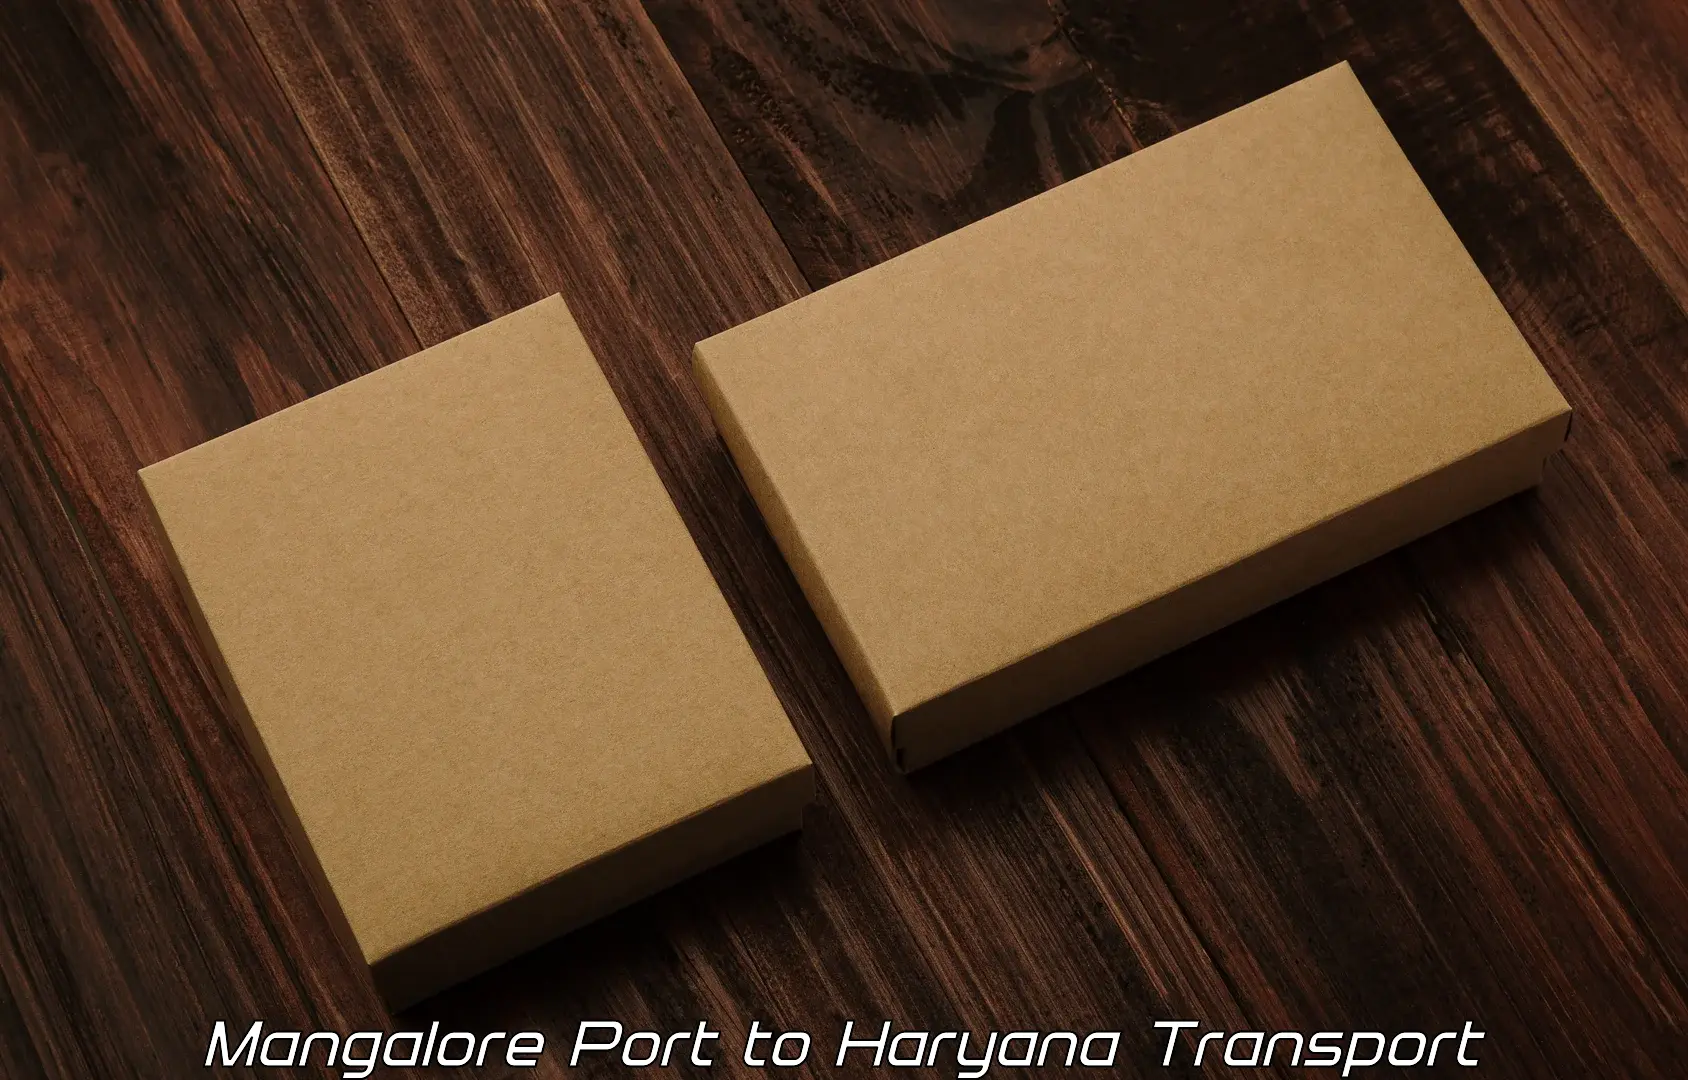 Online transport service Mangalore Port to Haryana